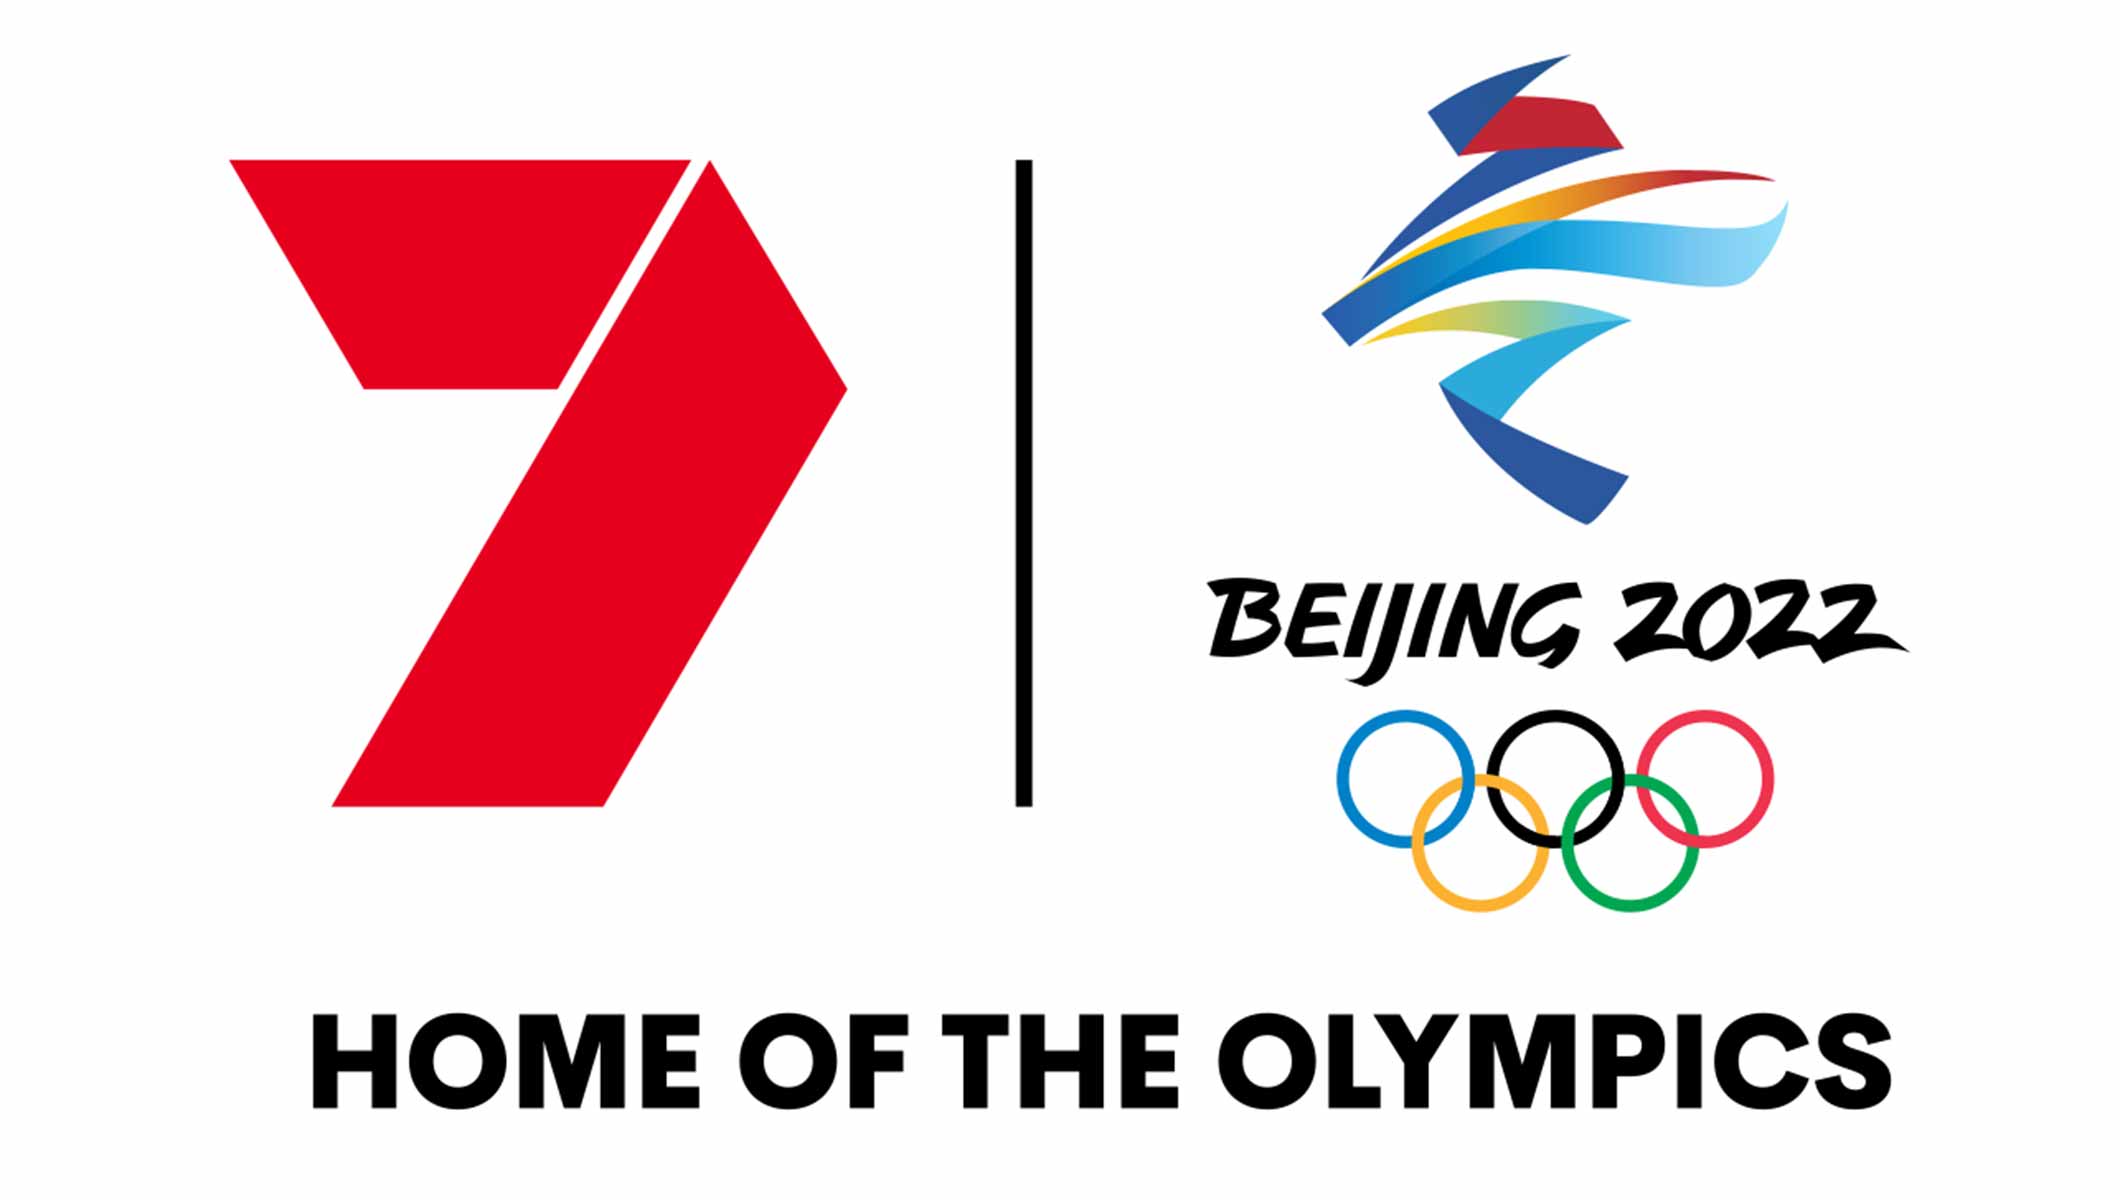 Ioc Awards Beijing 2022 Broadcast Rights In Australia Olympic News